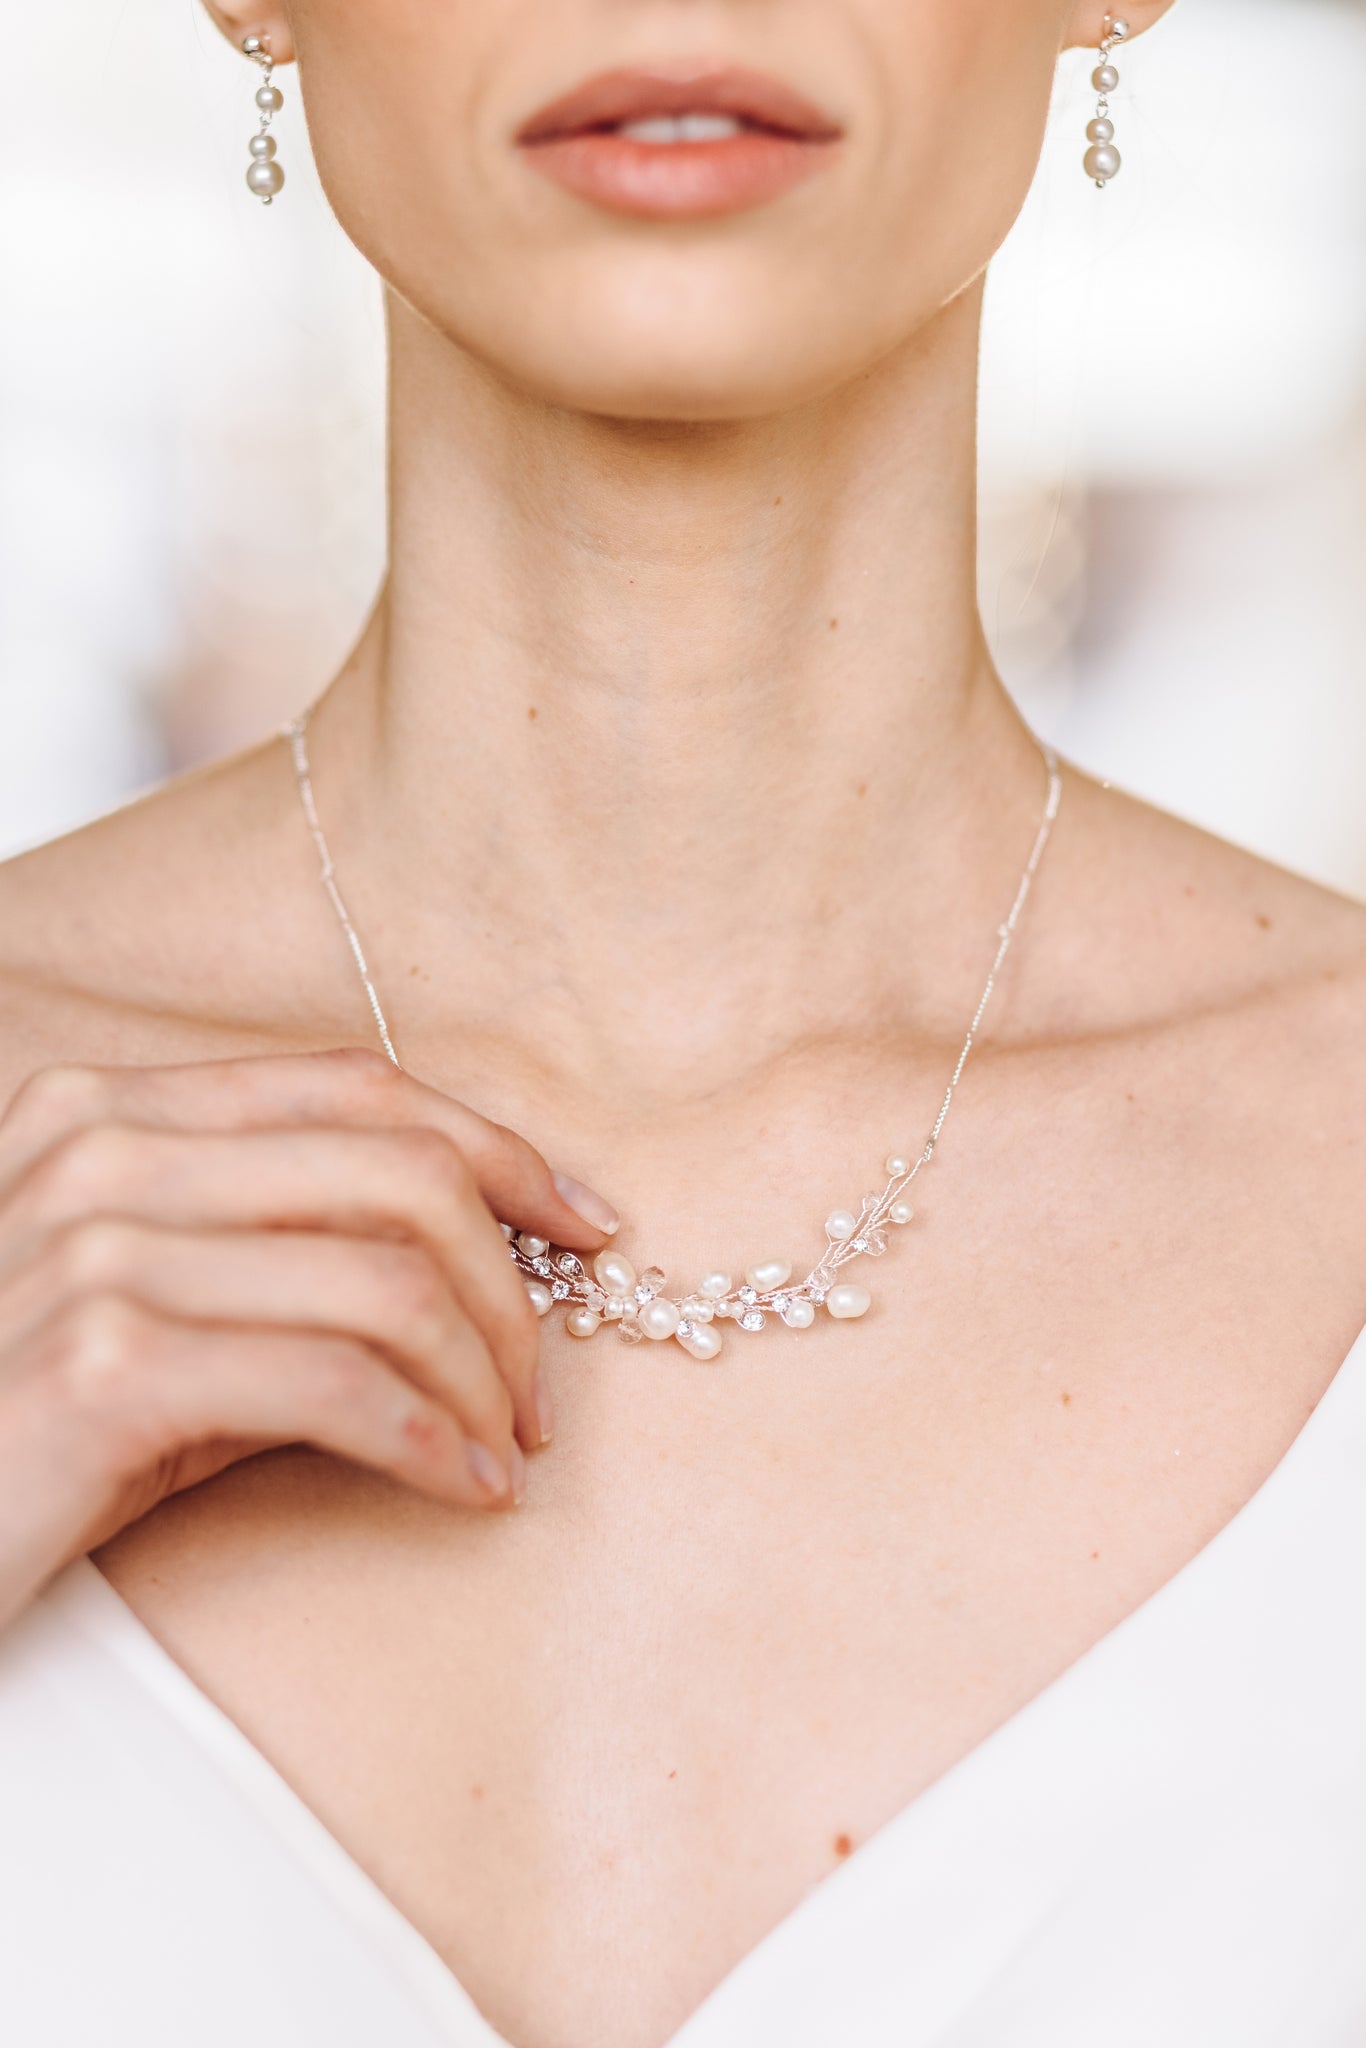 Dainty simple bridal necklace